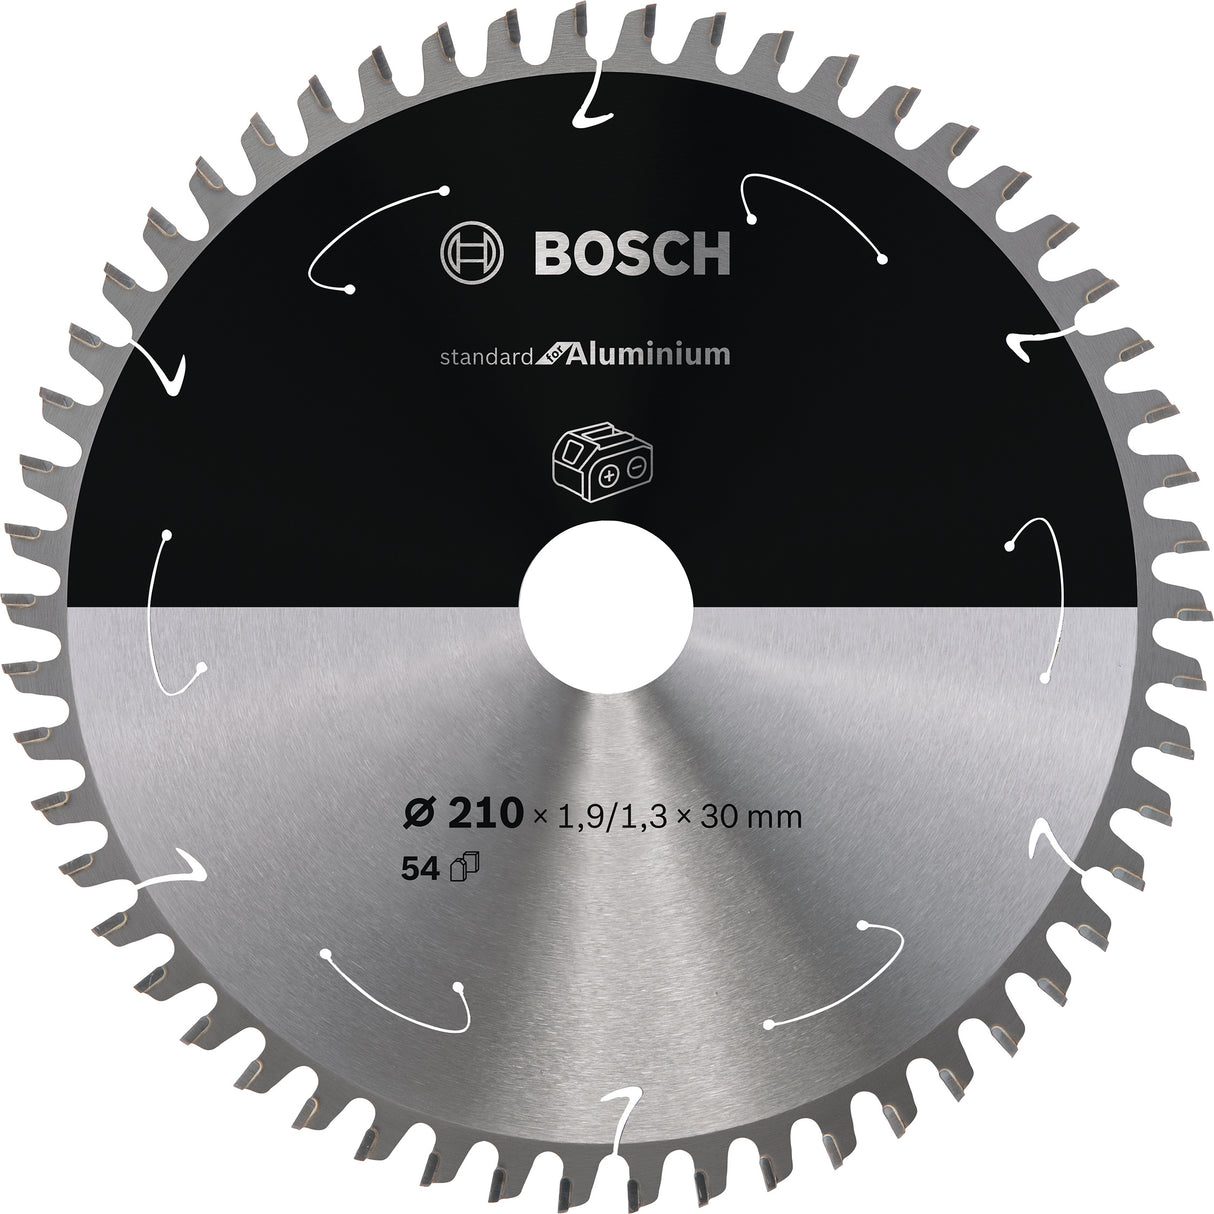 Bosch Professional Aluminium Circular Saw Blade for Cordless Saws - 210x1.9/1.3x30 T54 - Standard